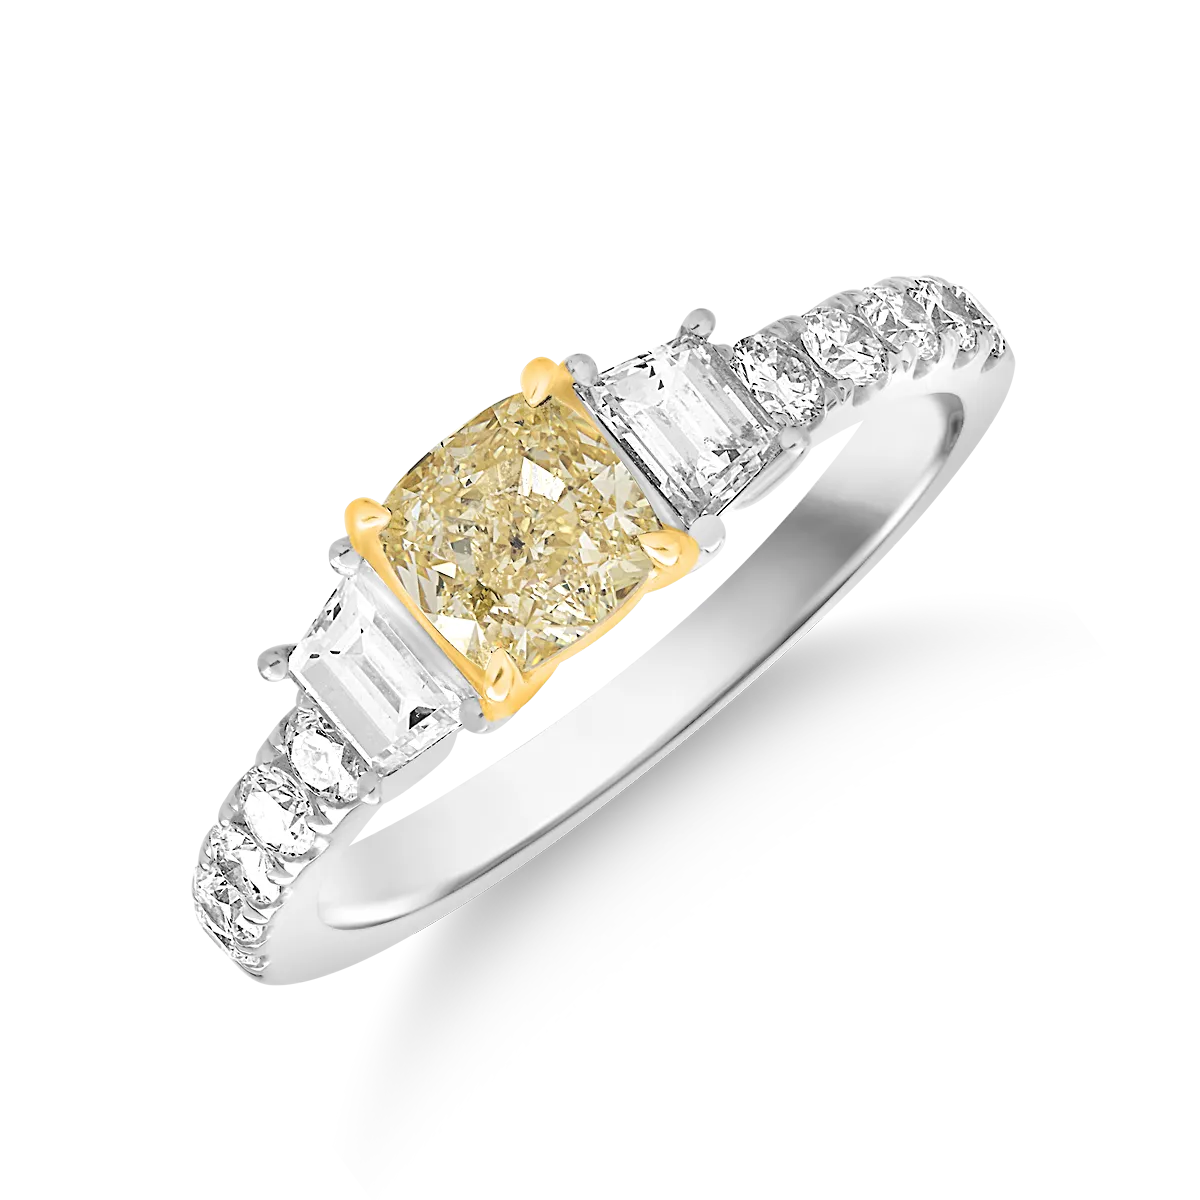 18K white gold engagement ring with 1ct yellow diamond and 0.48ct diamonds